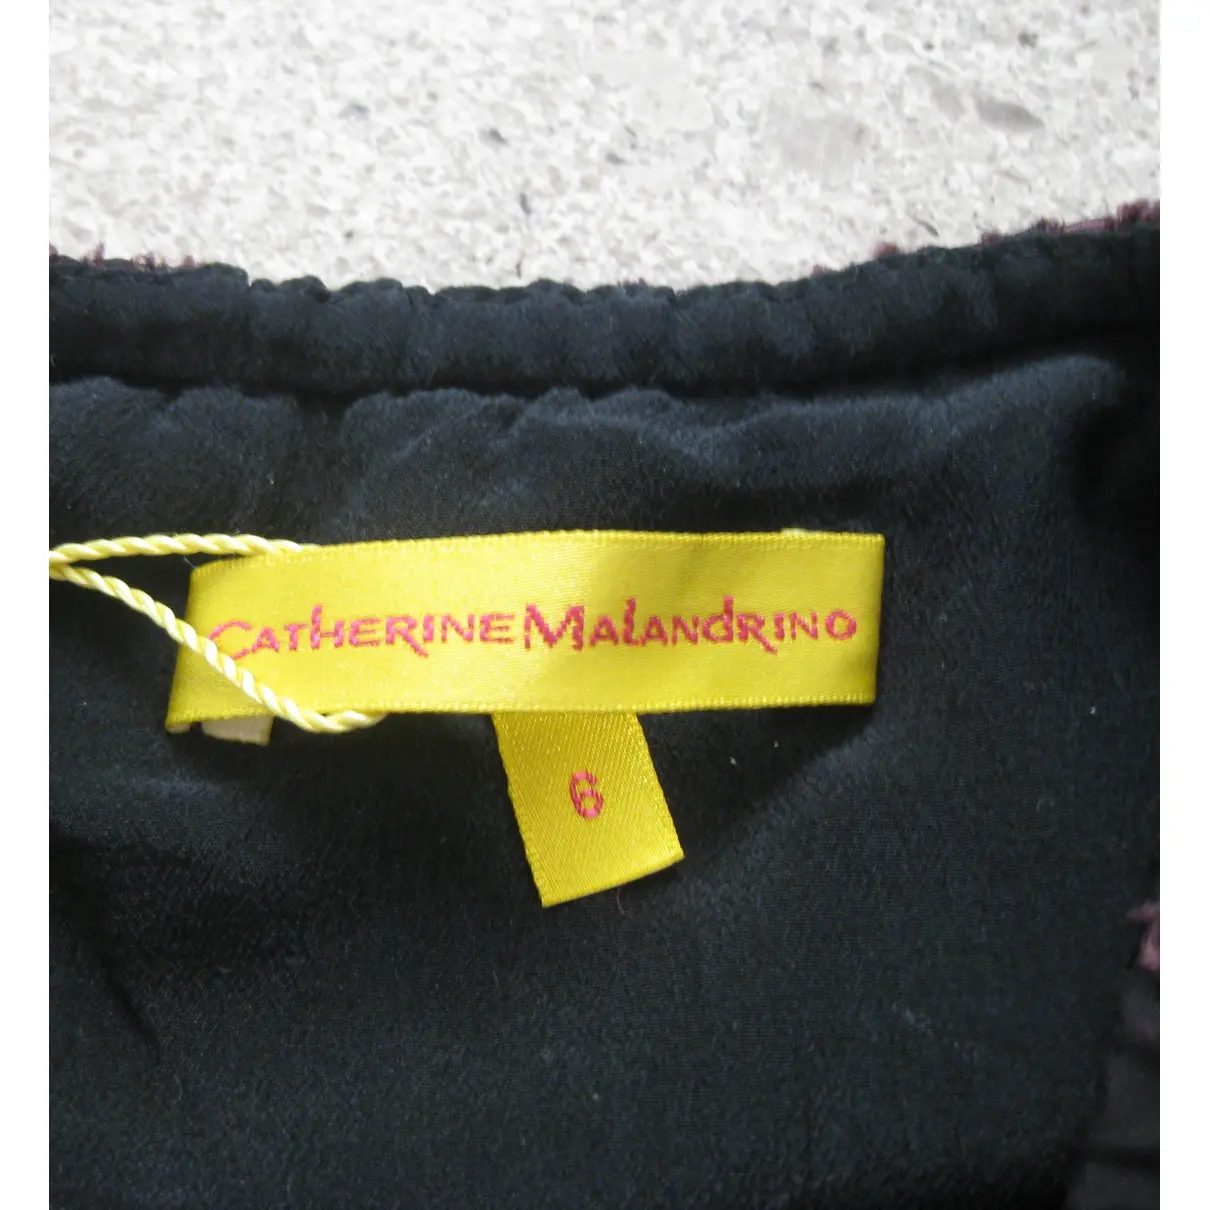 Buy Catherine Malandrino Silk camisole online